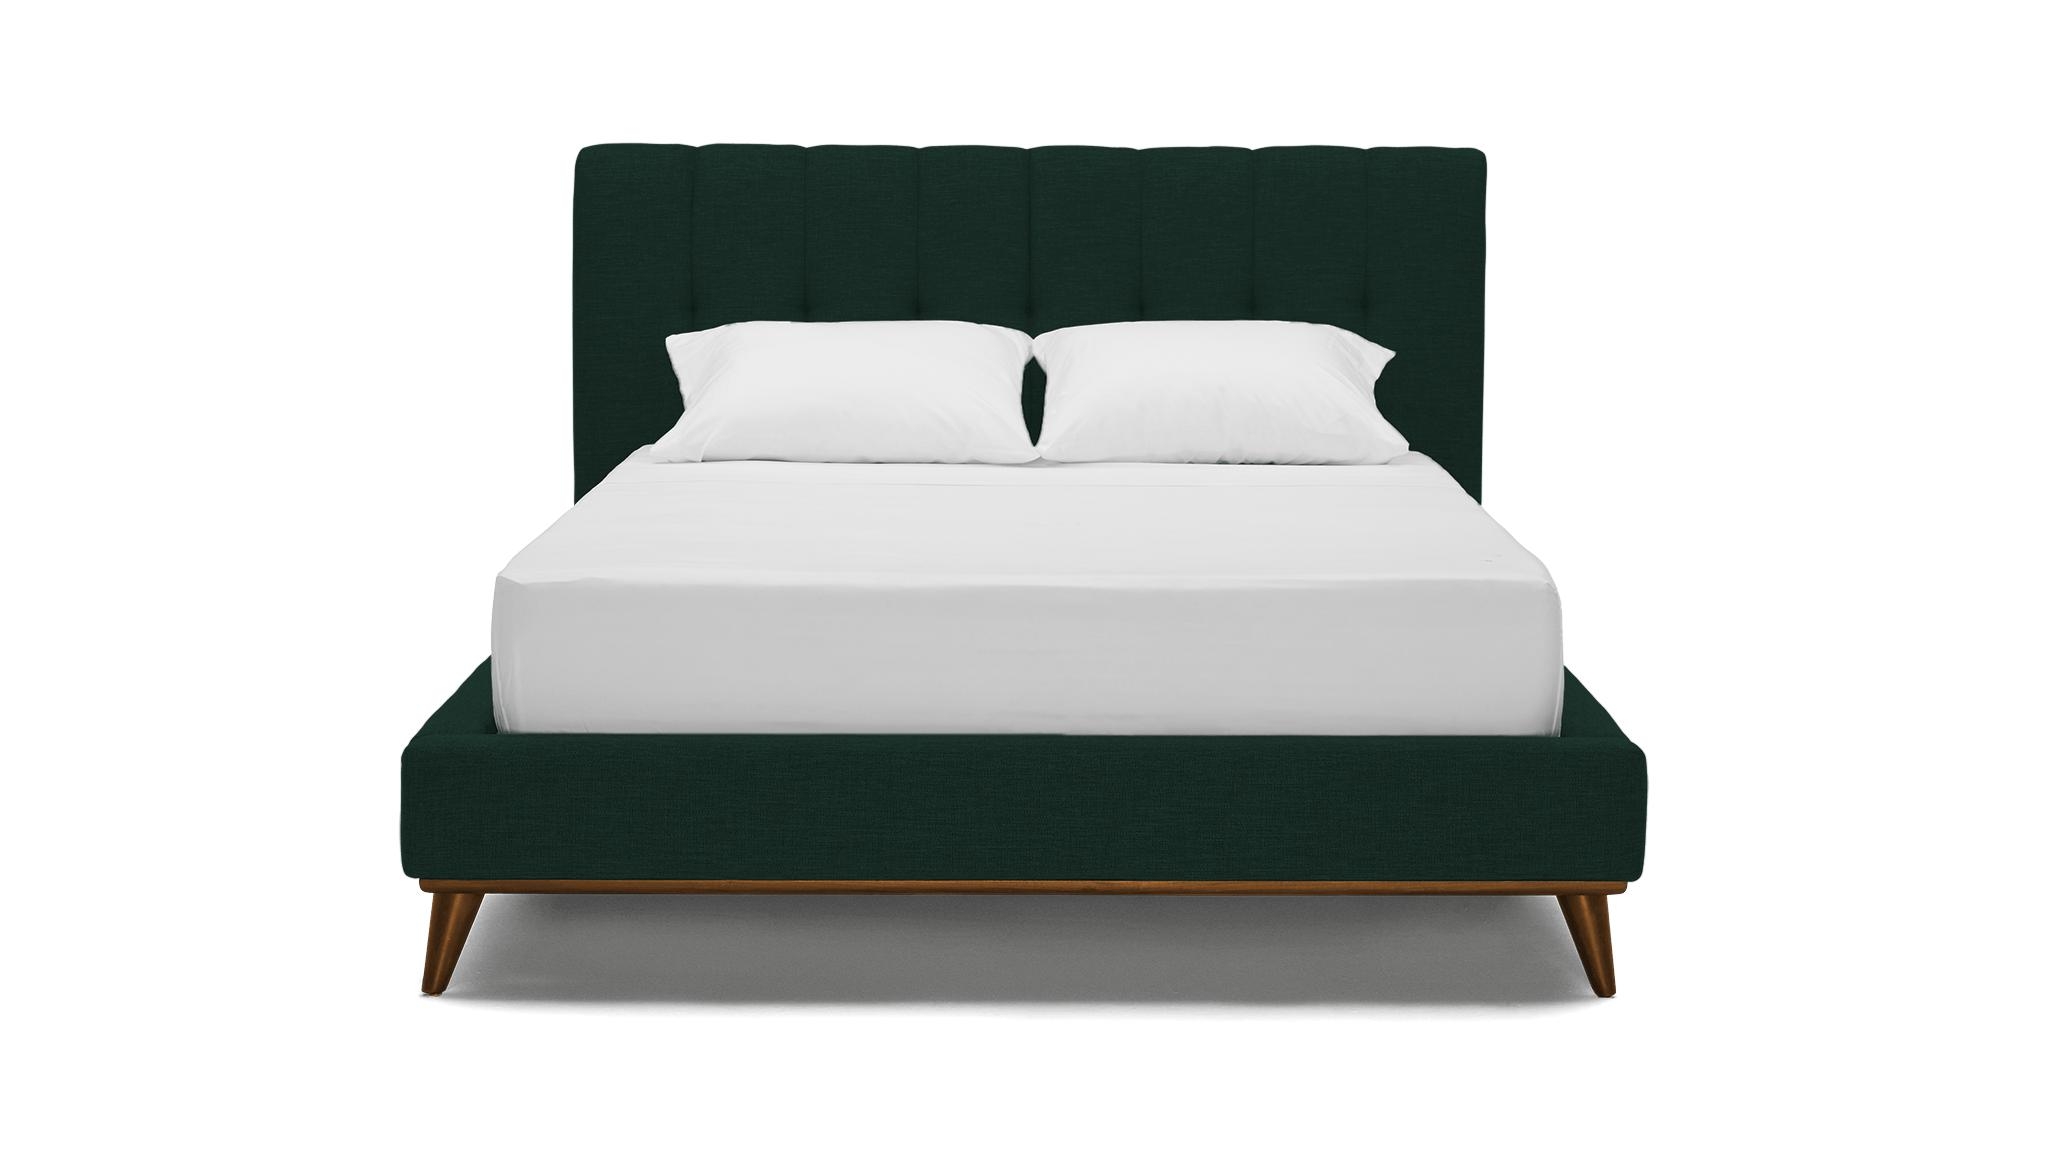 Green Hughes Mid Century Modern Bed - Royale Evergreen - Mocha - Queen - Image 0